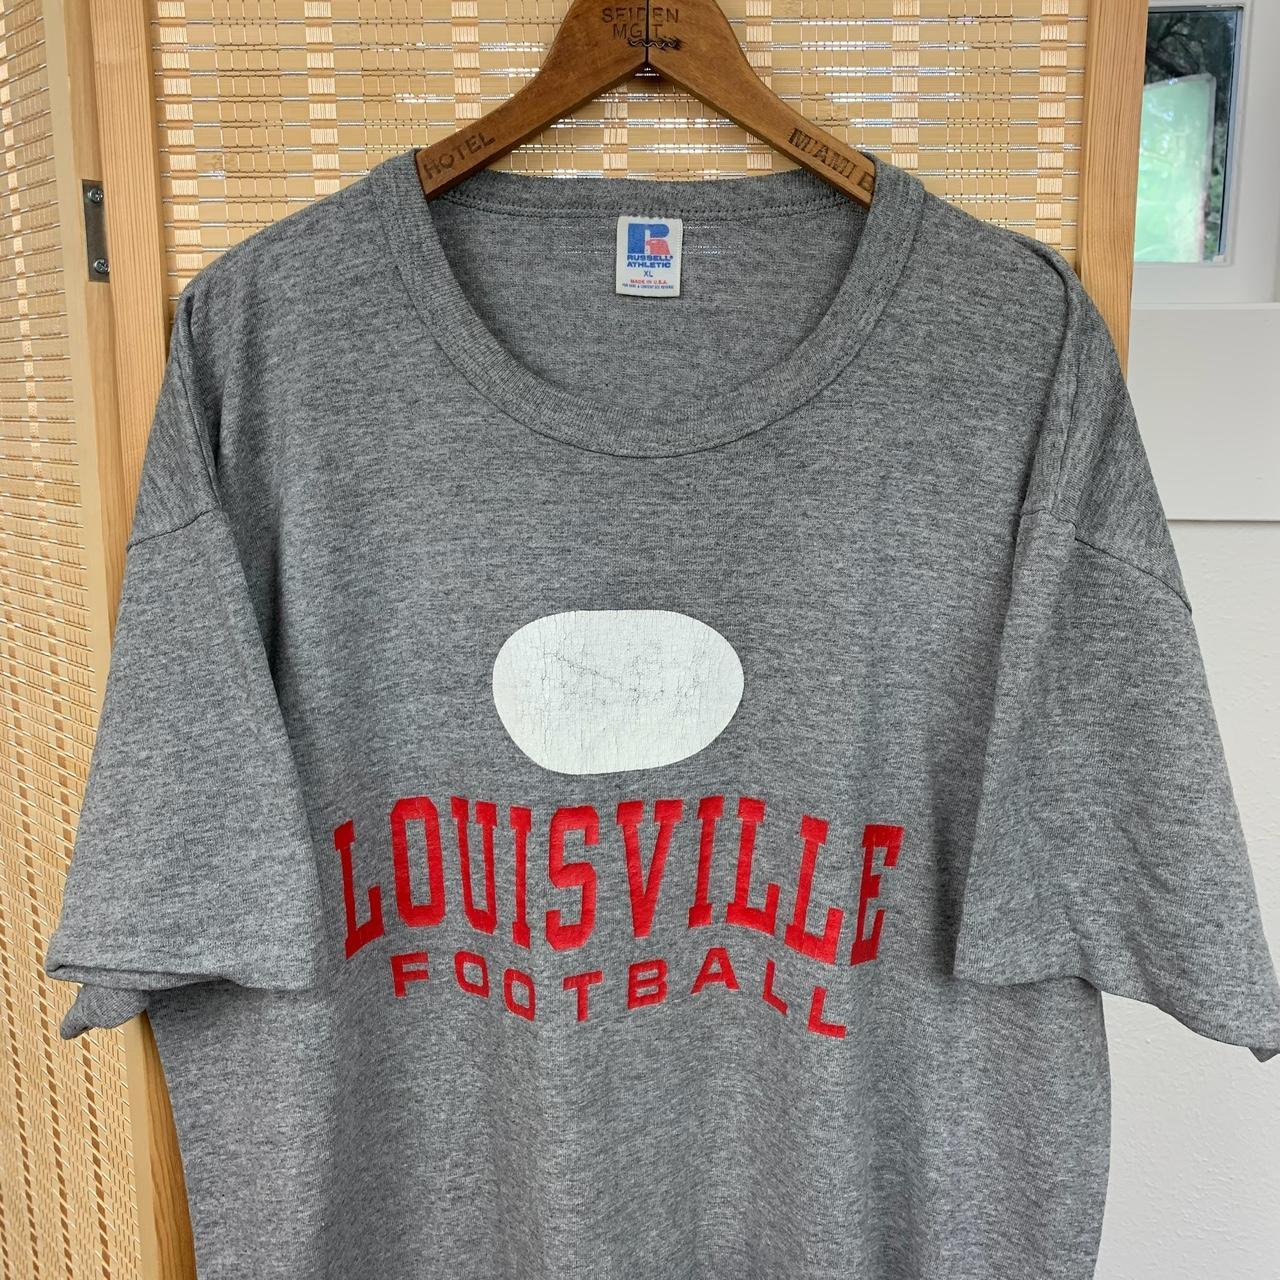 Vintage louisville cardinals shirt. This vintage - Depop